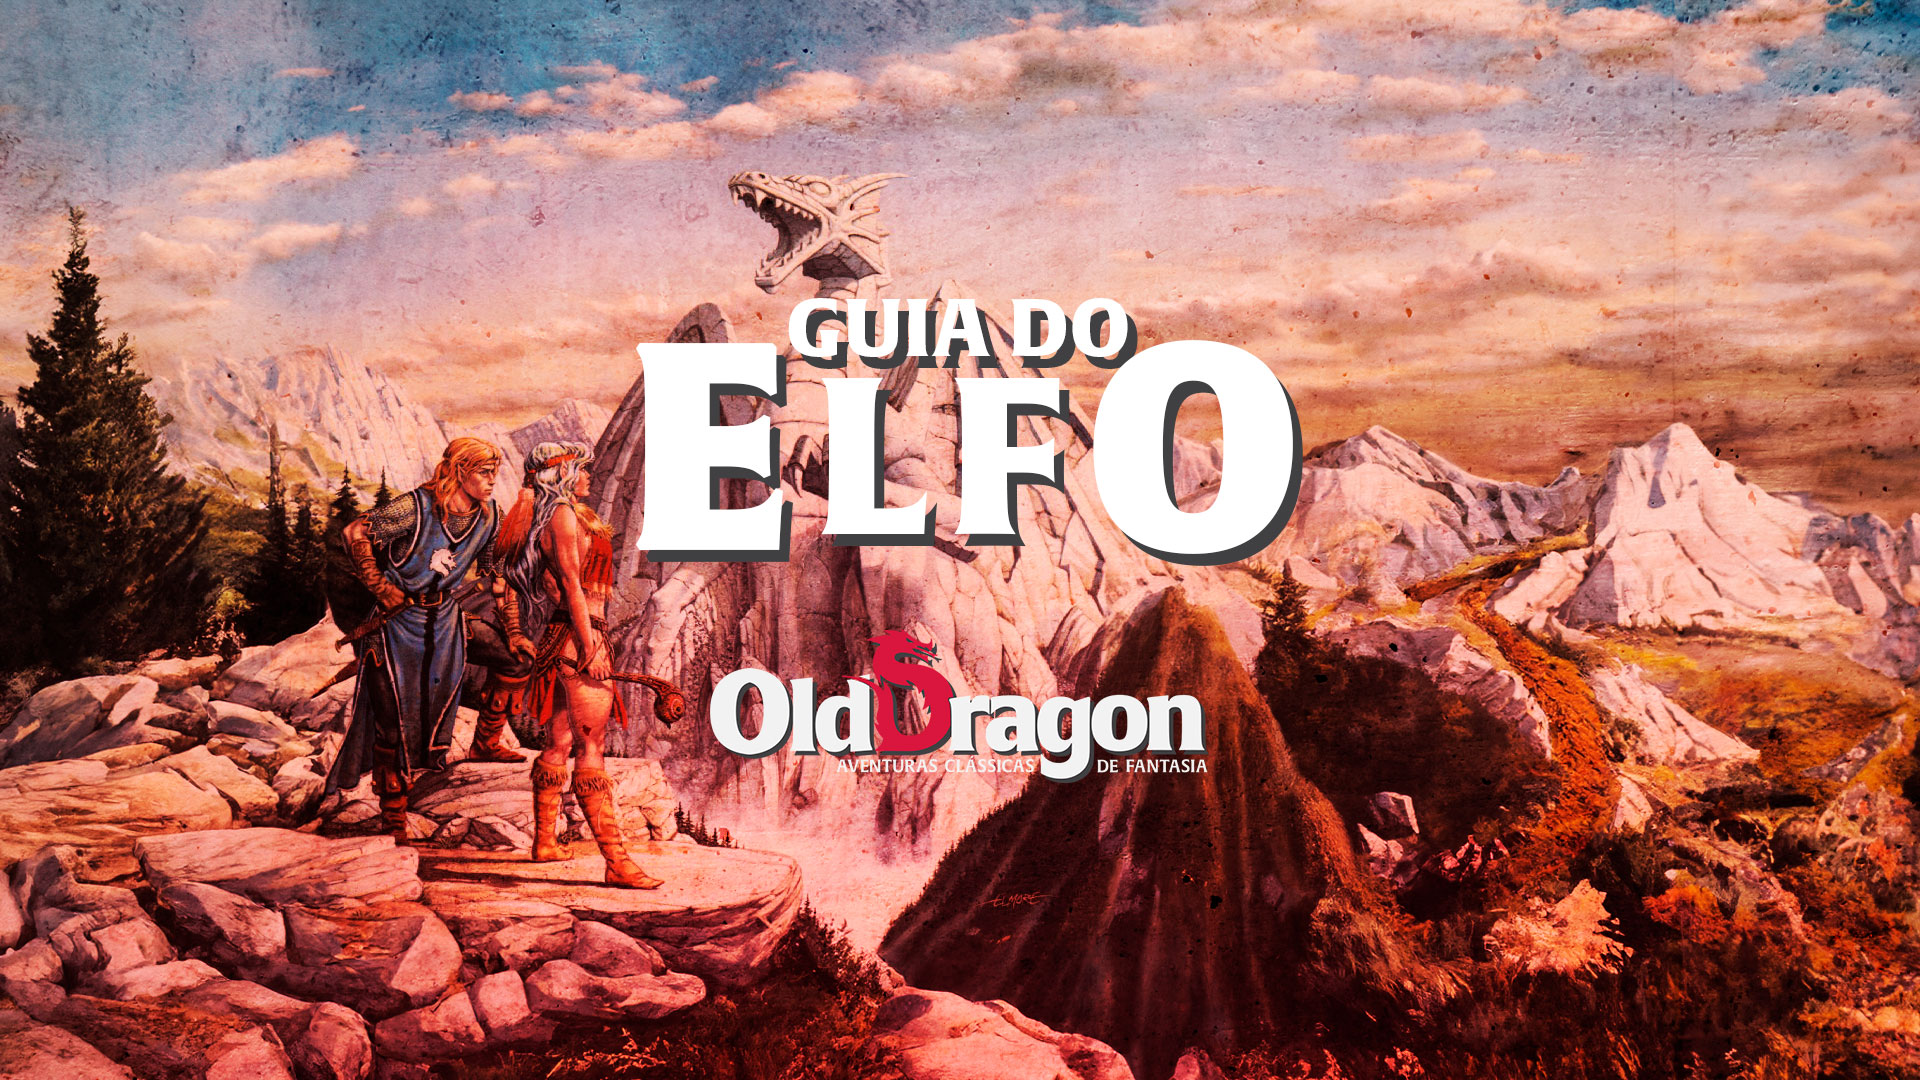 Old Dragon 2 – Guia do Elfo